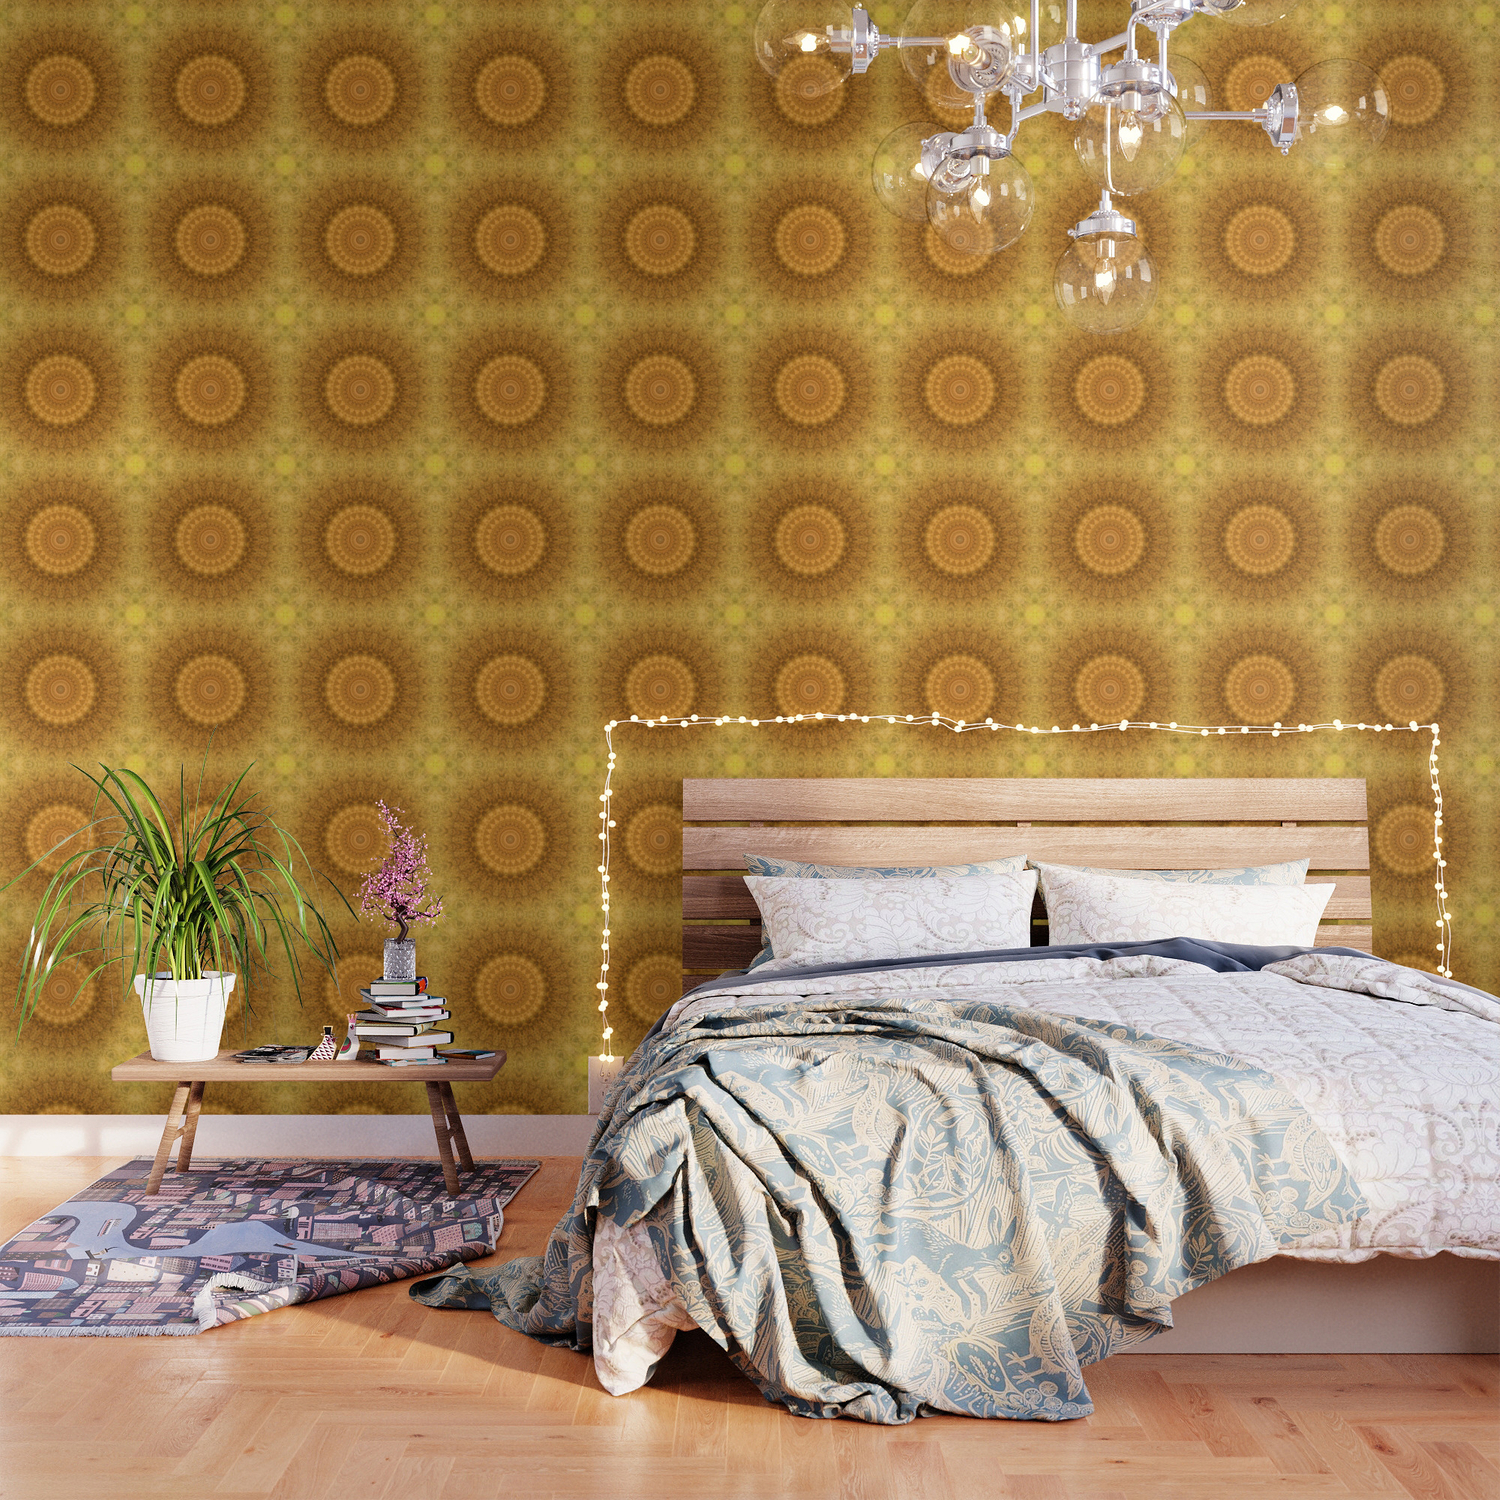 Aesthetic Yellow Retro Wallpapers